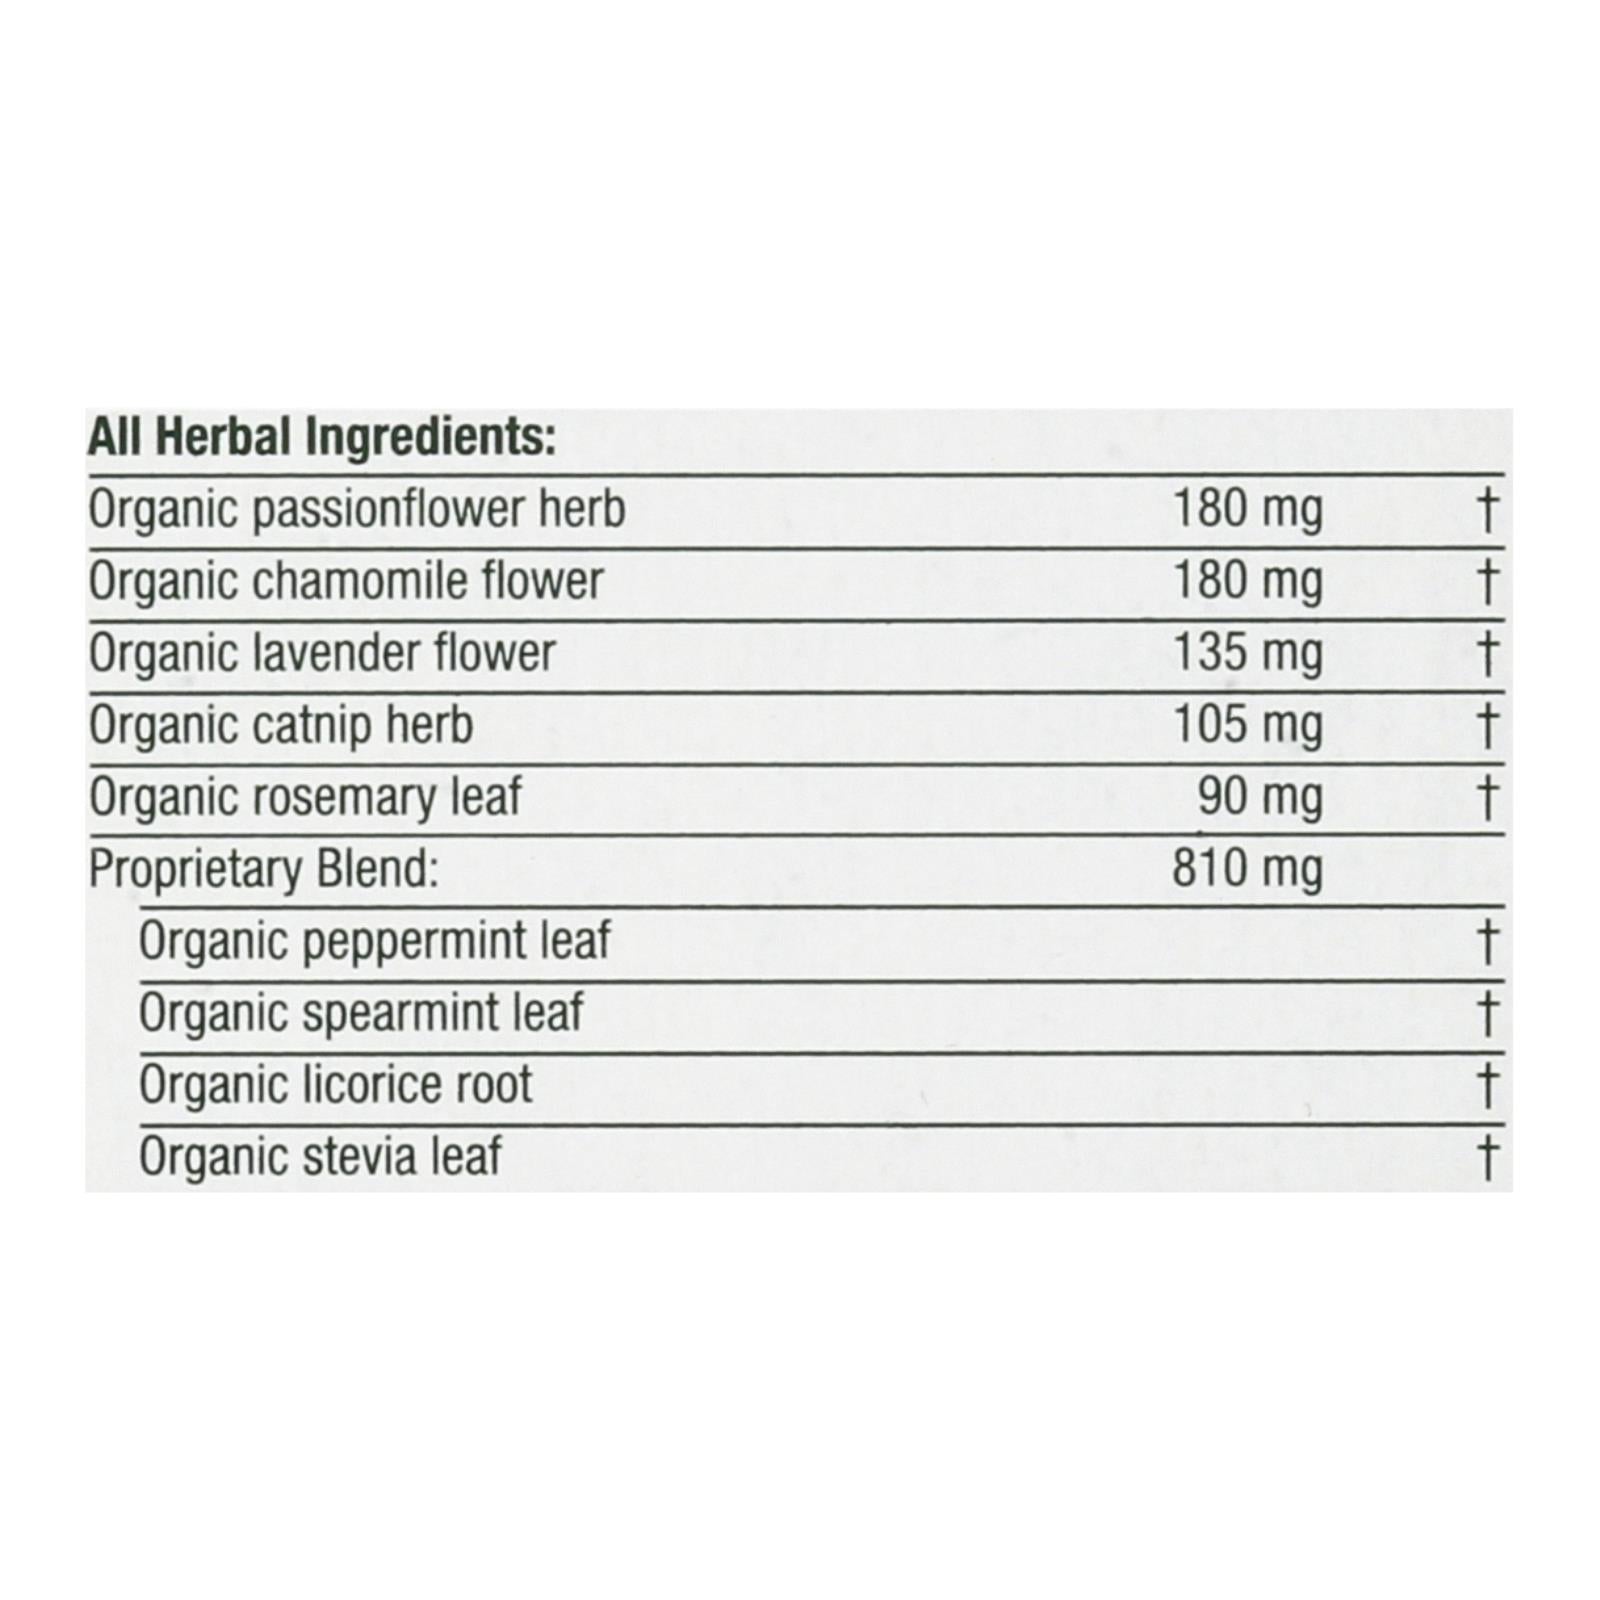 Traditional Medicinals Organic Easy Now Herbal Tea - 16 Tea Bags - Case Of 6